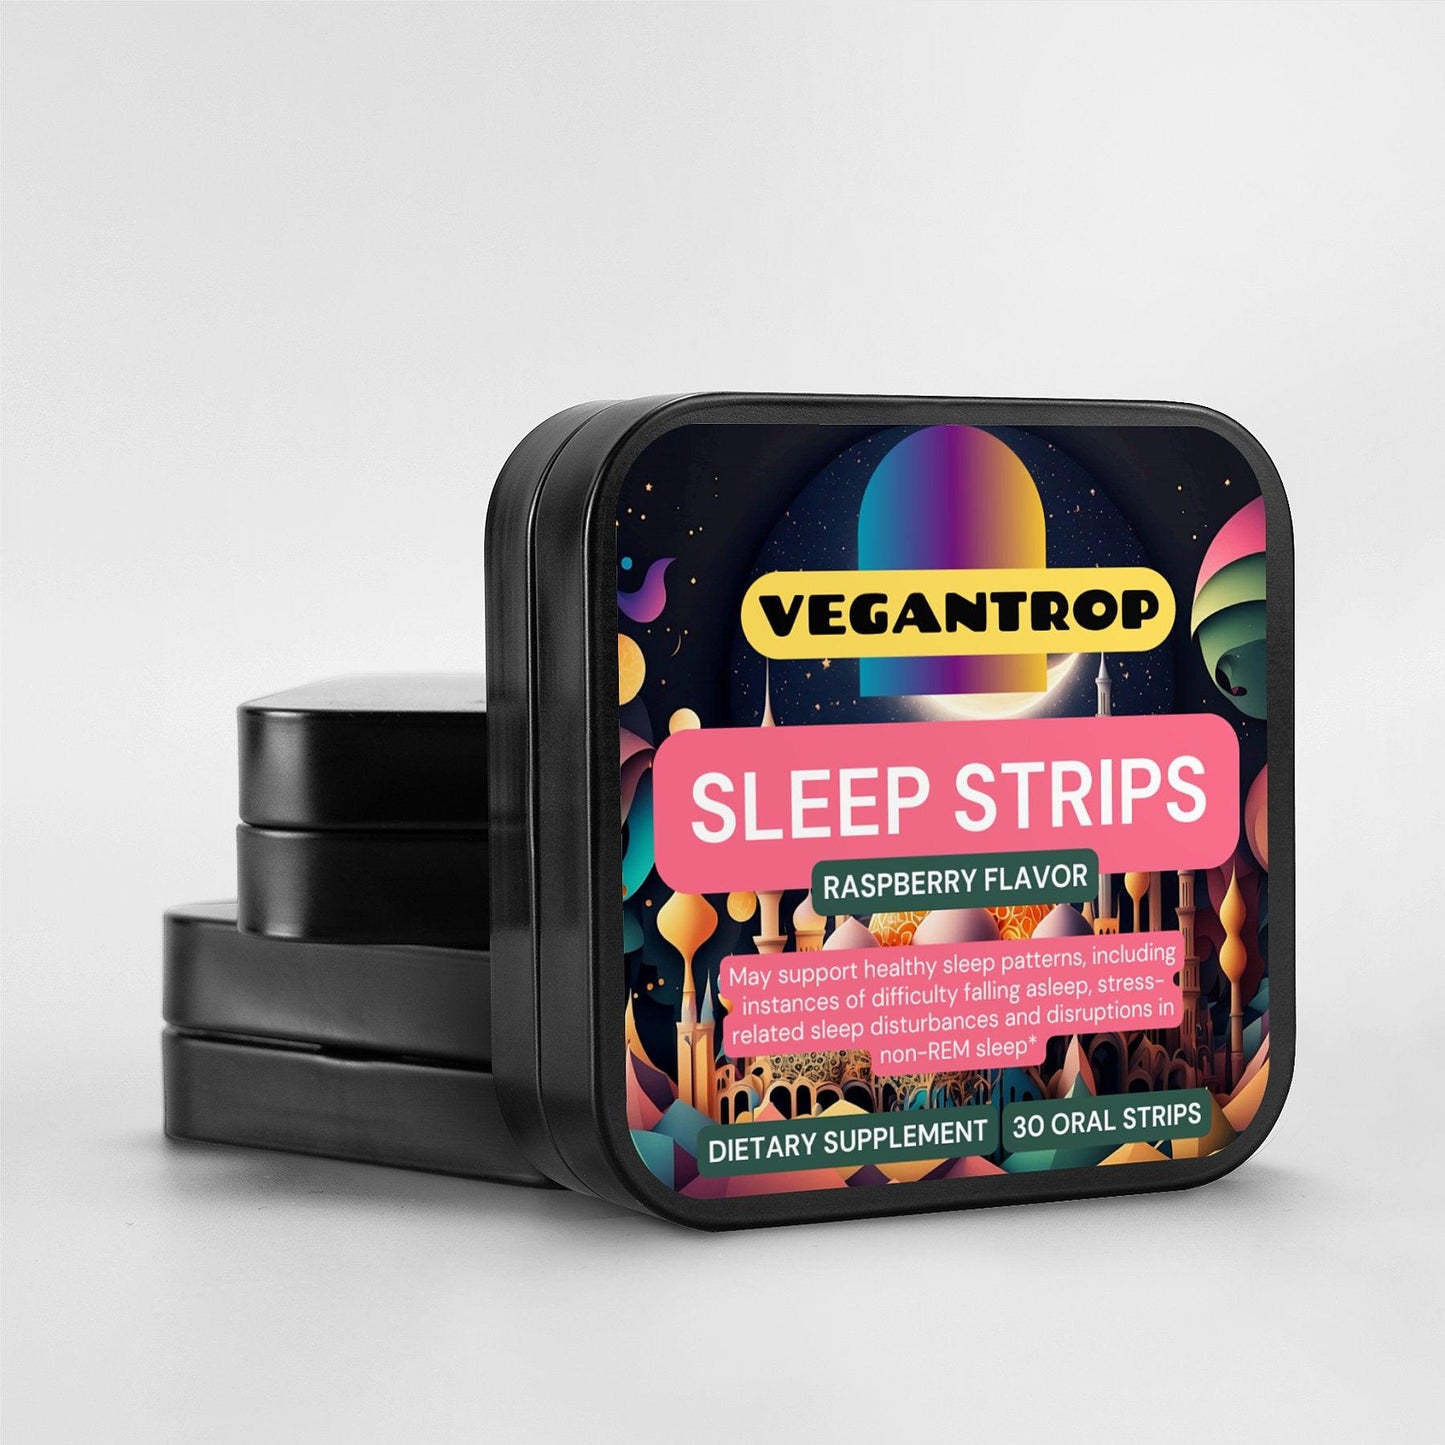 Gentle Sleep Oral Strips (Vegan) - VEGANTROP